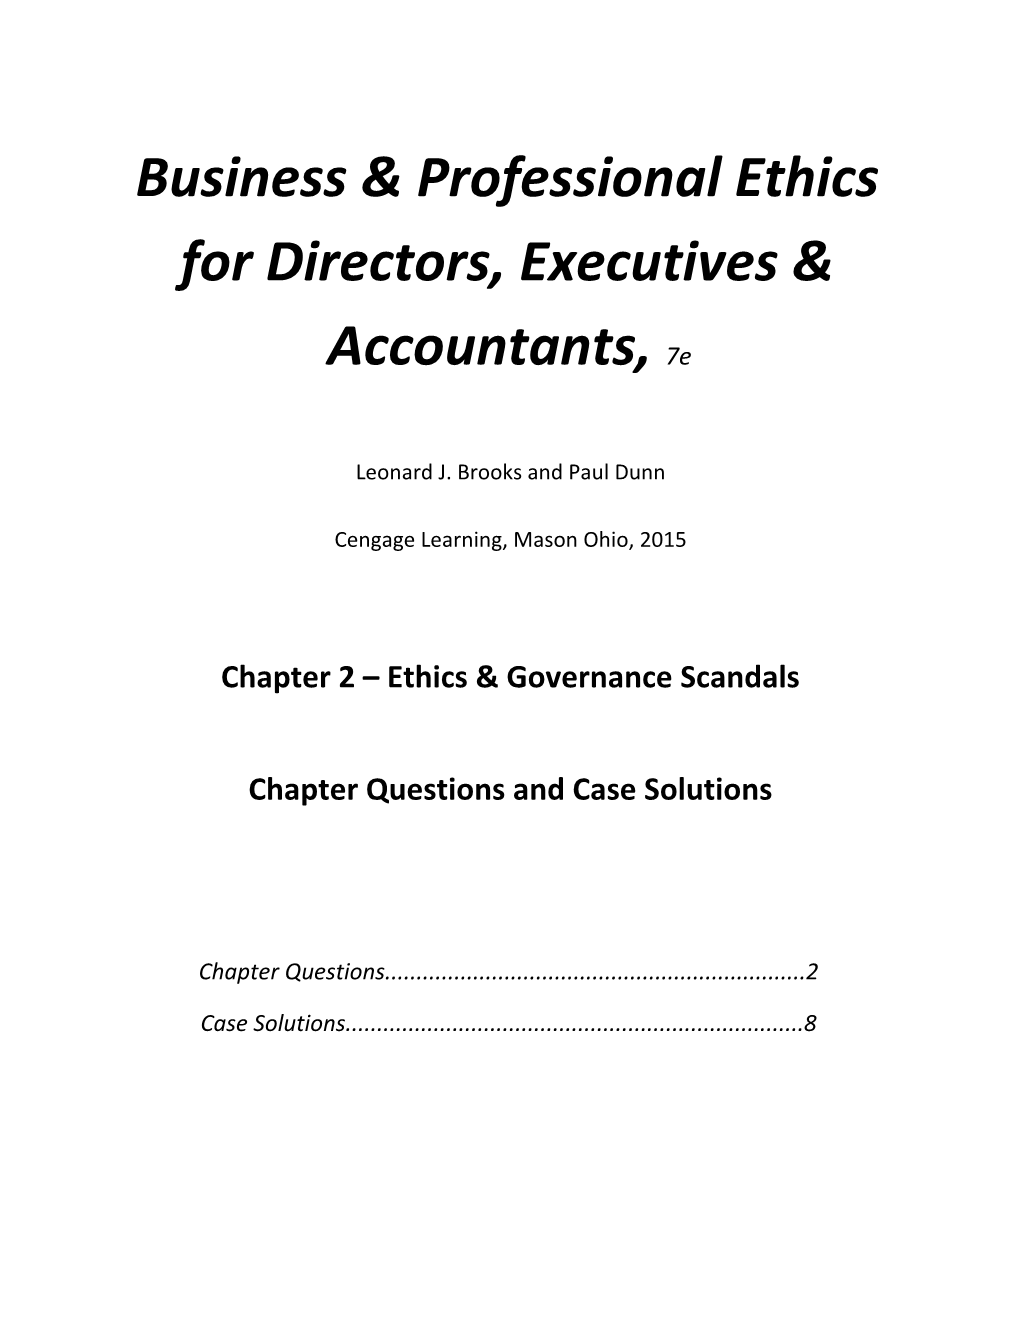 Business & Professional Ethics for Directors, Executives & Accountants, 7E